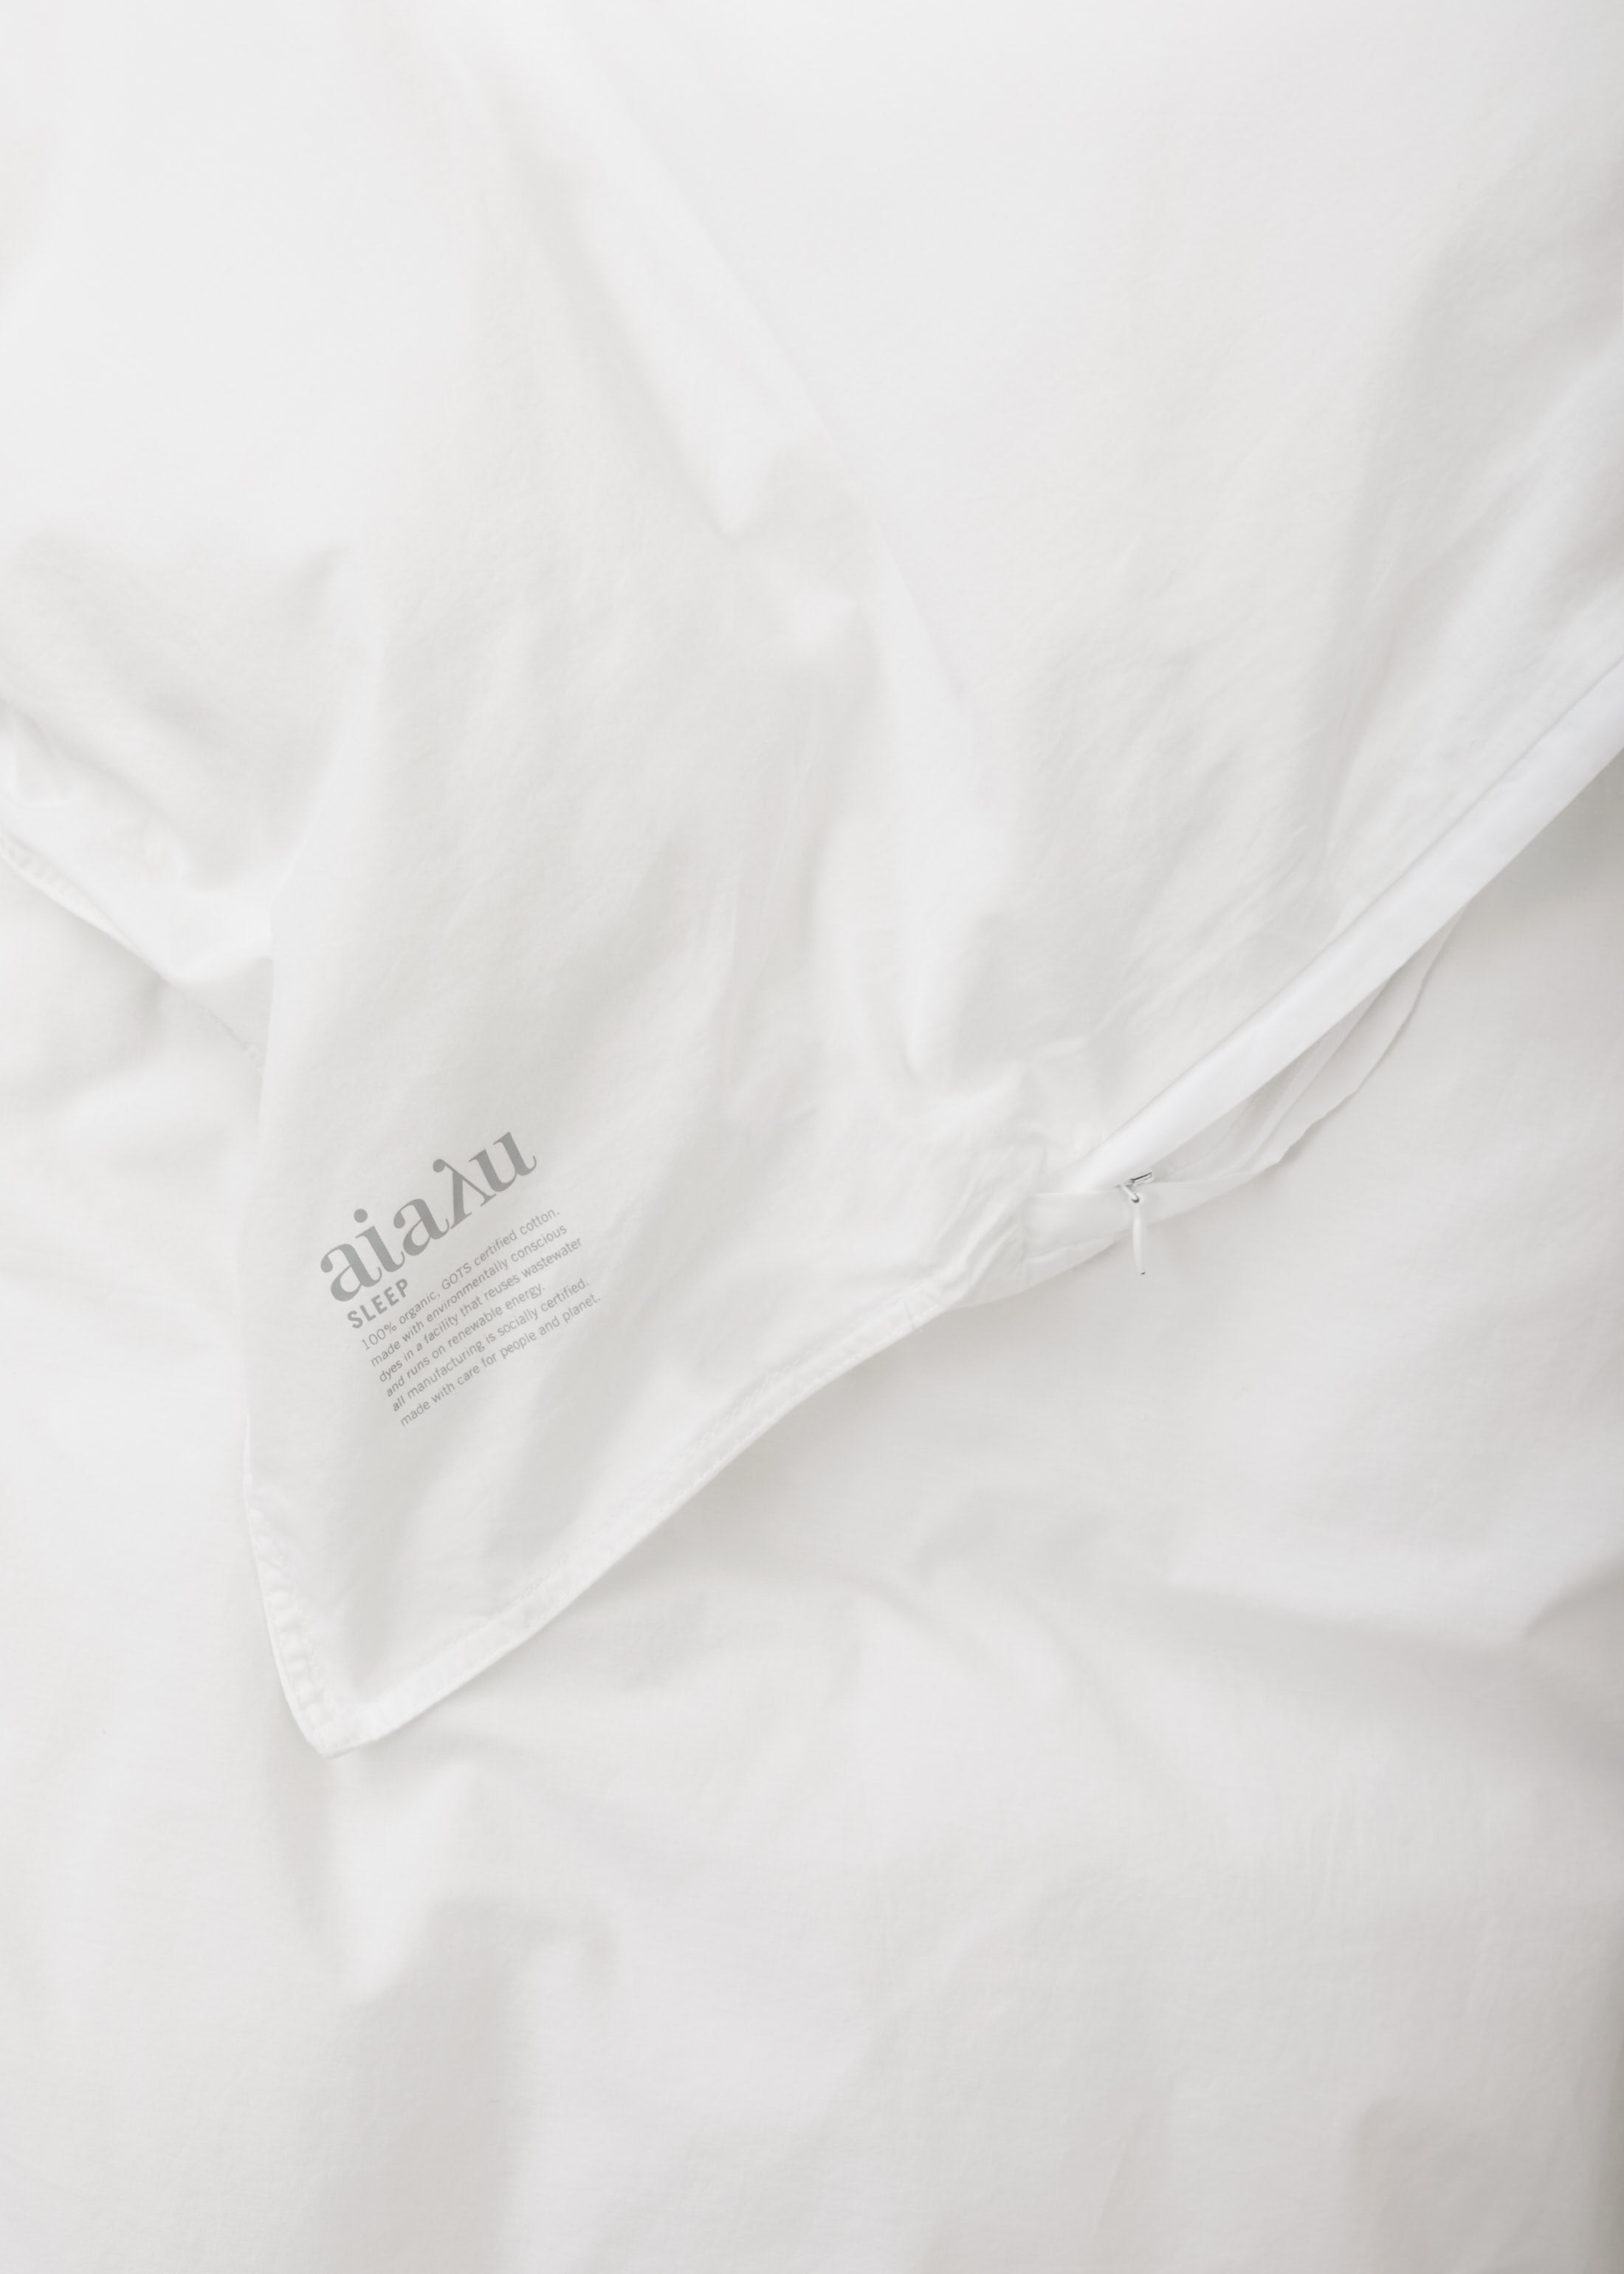 Duvet set & pillow case - white | White